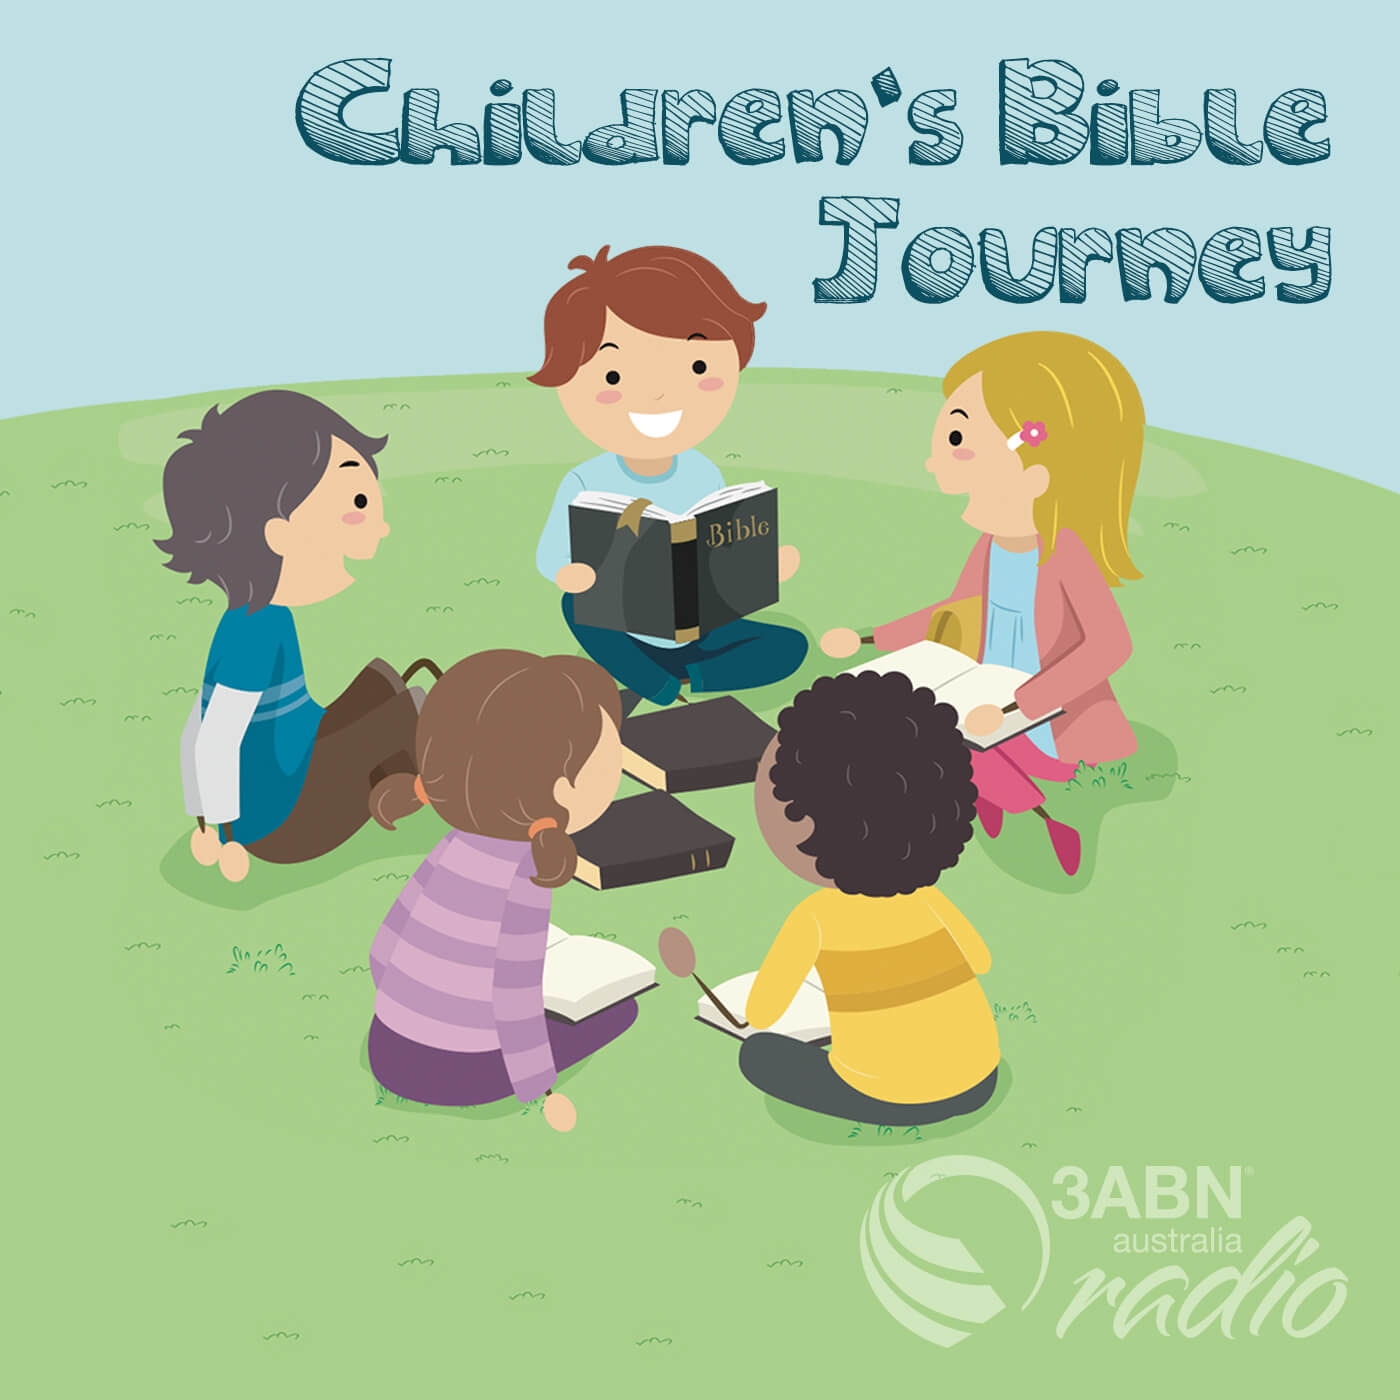 Children's Bible Journey - 2204